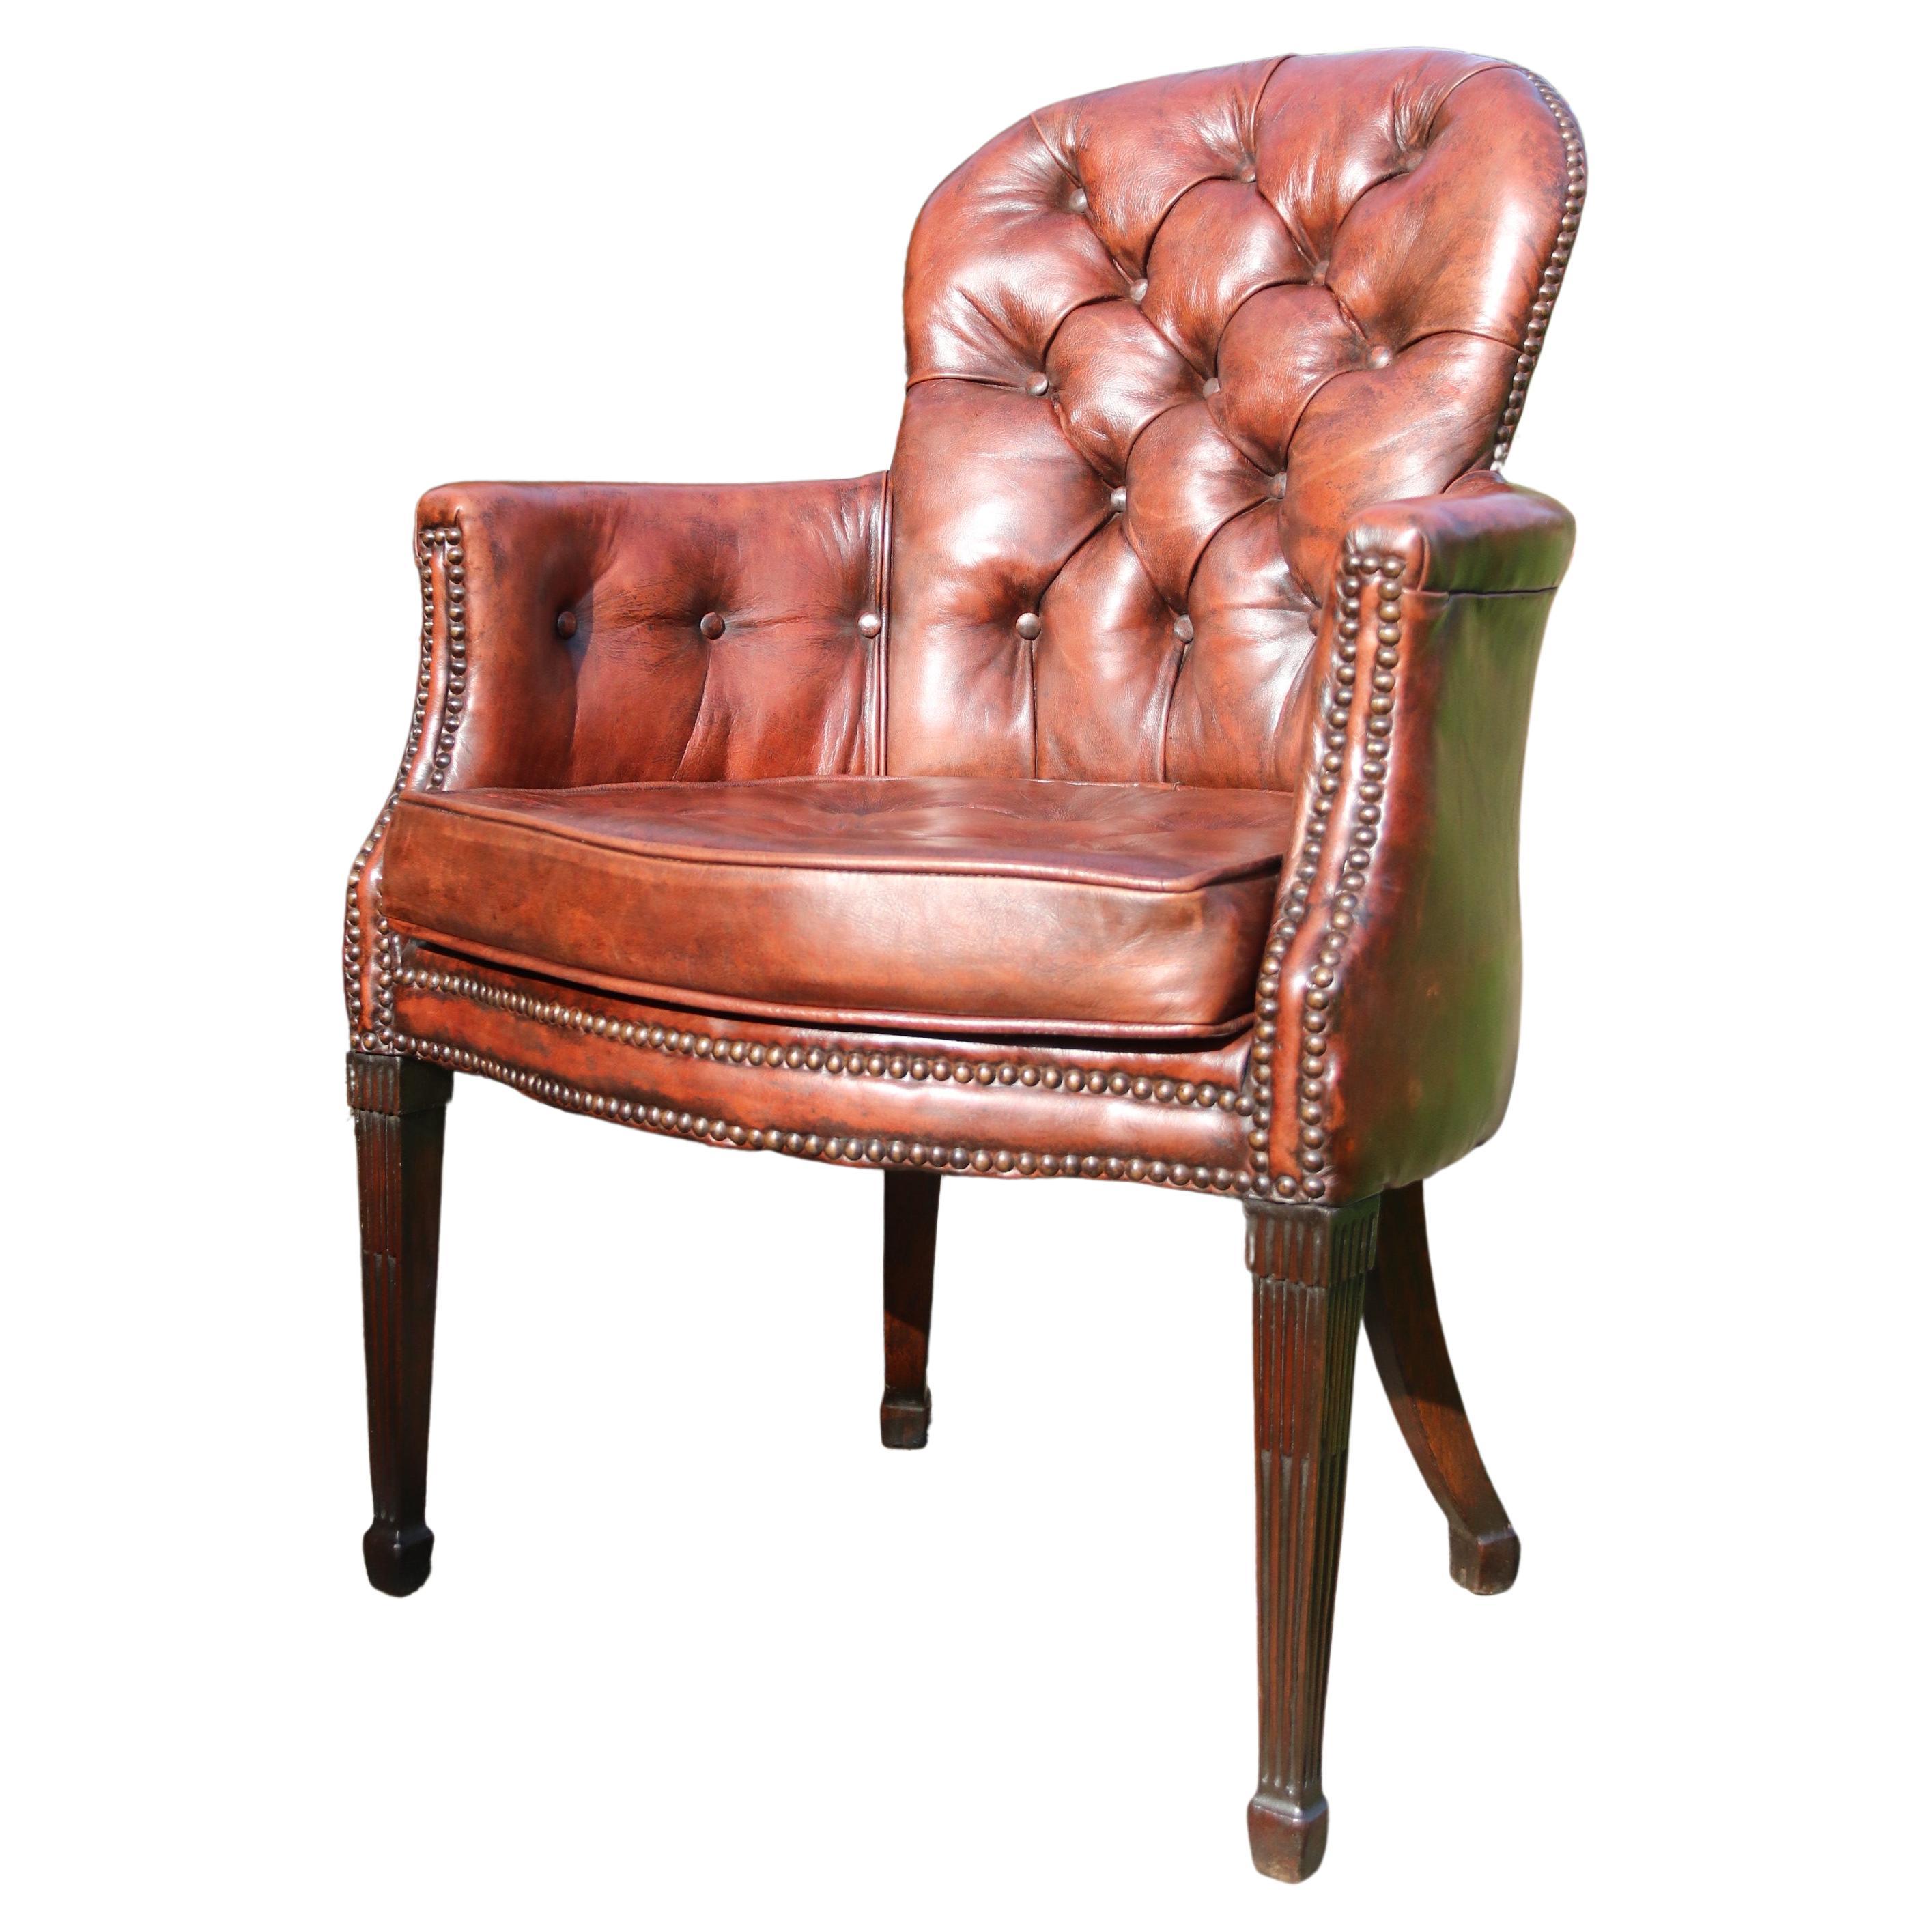 English 18th century leather armchair circa 1790